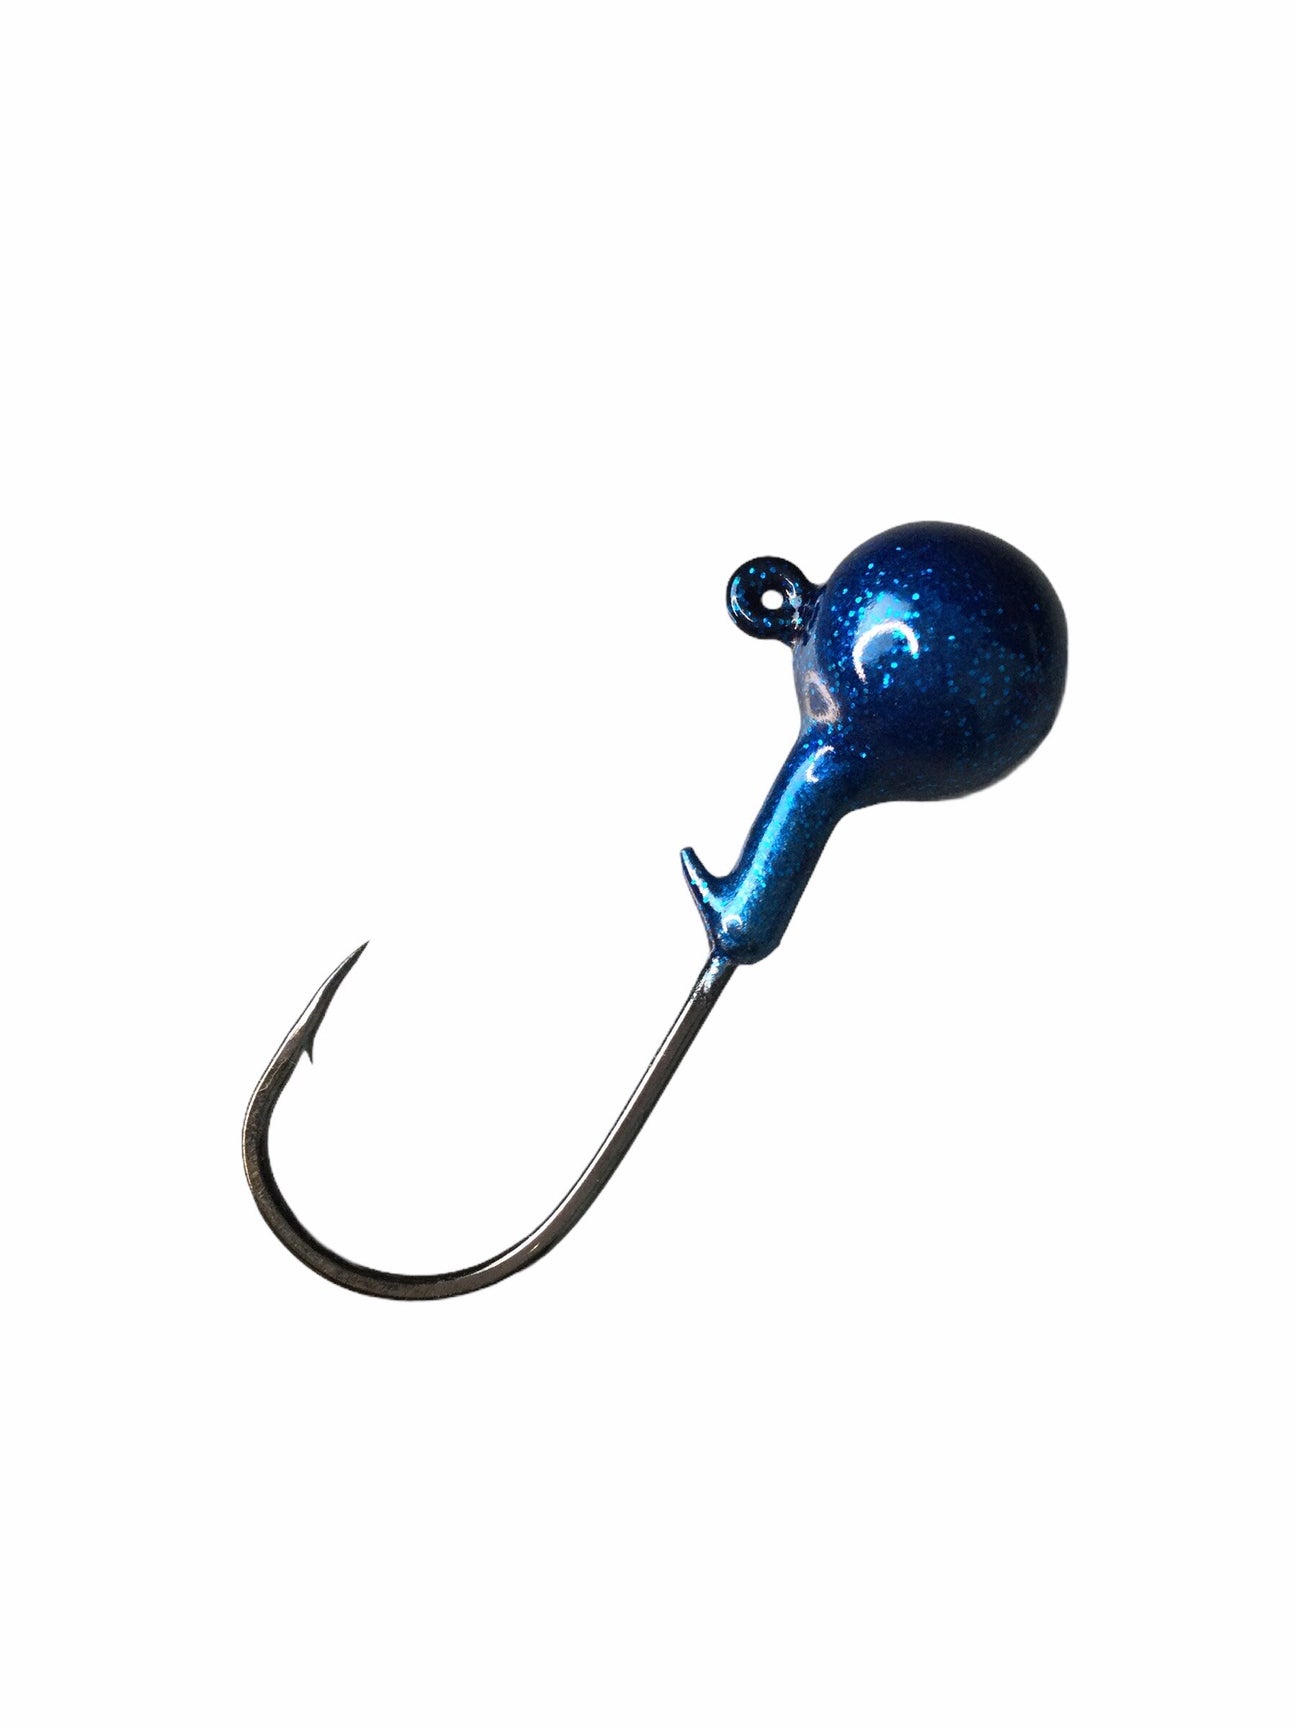 Owner Hooks: 3/8 oz Round Ball Lead Head Jig Hooks